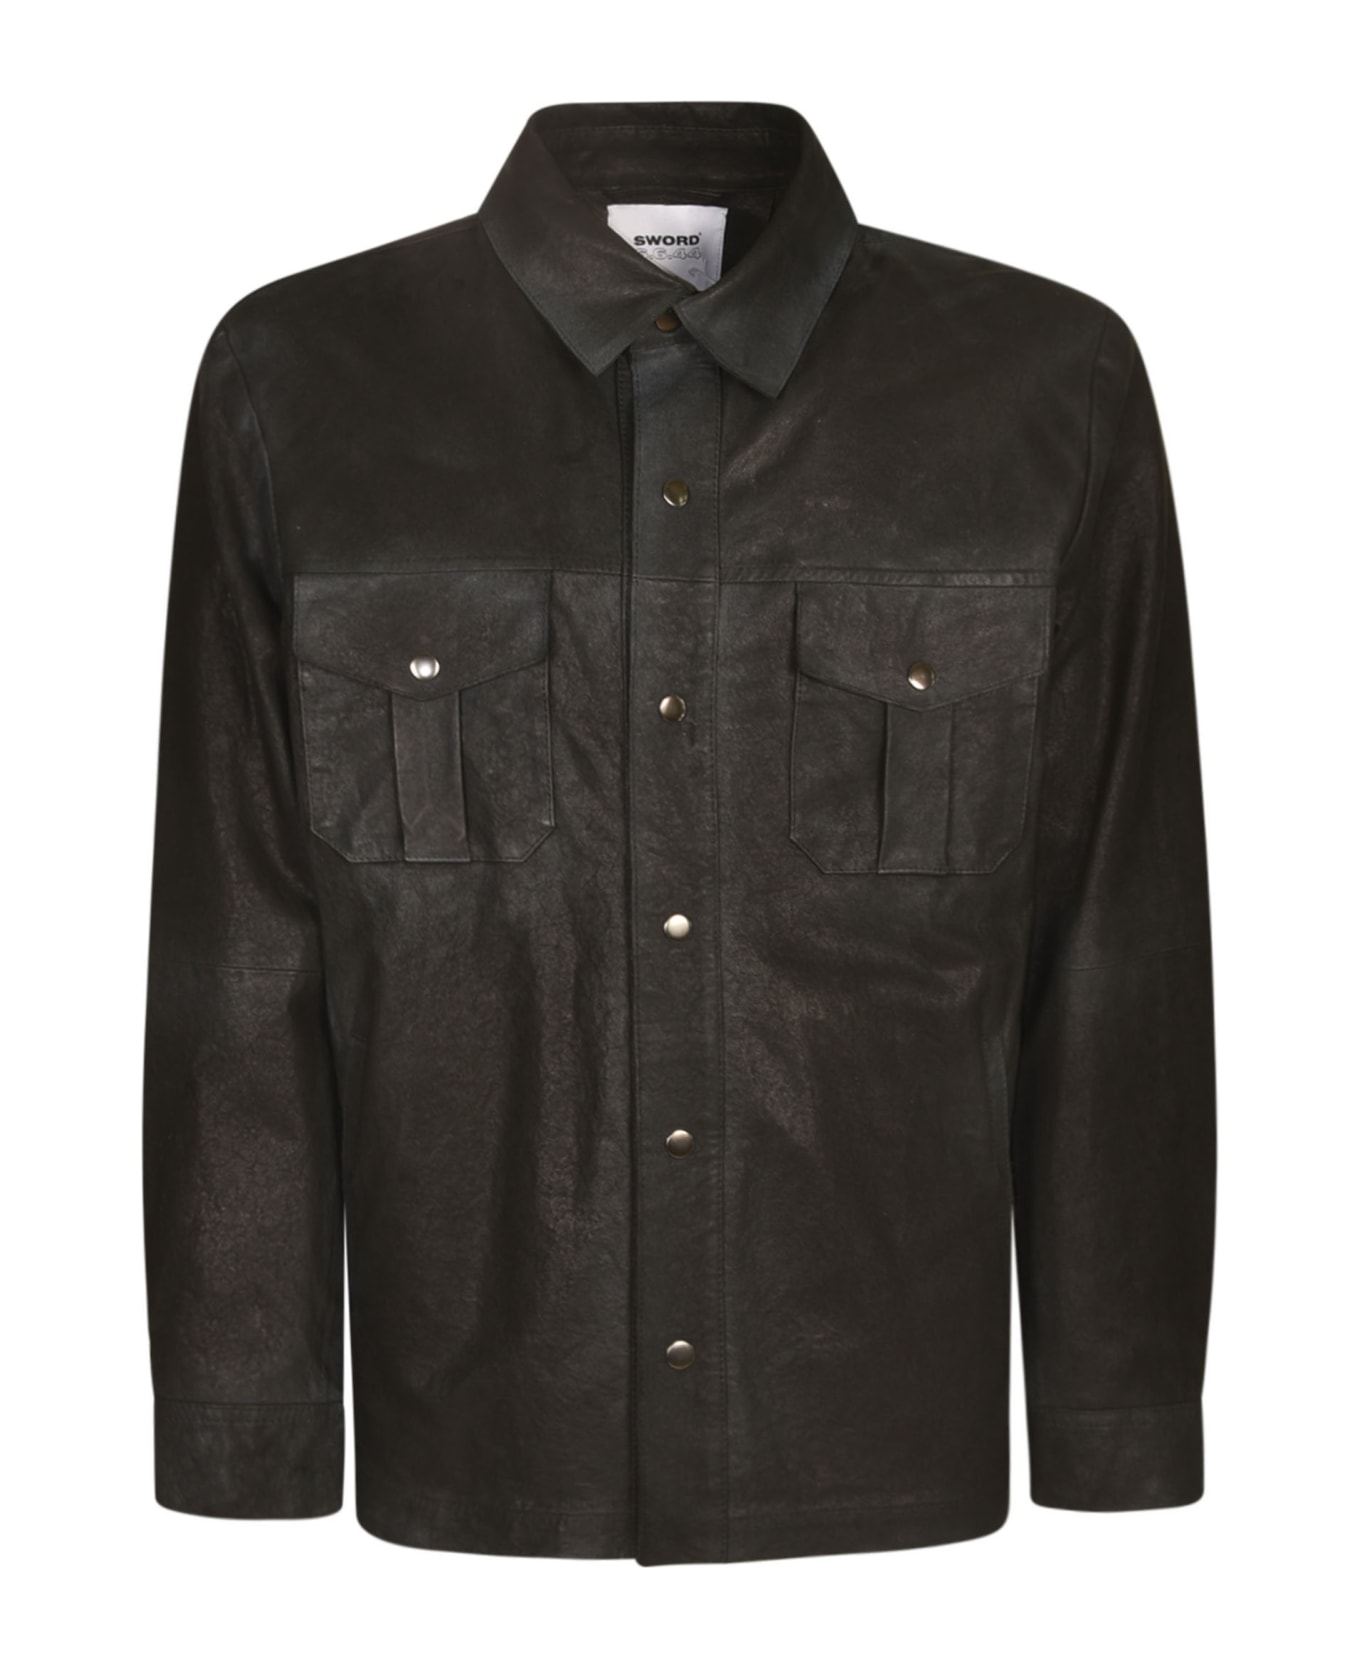 S.W.O.R.D 6.6.44 Cargo Buttoned Polo Shirt - Black シャツ